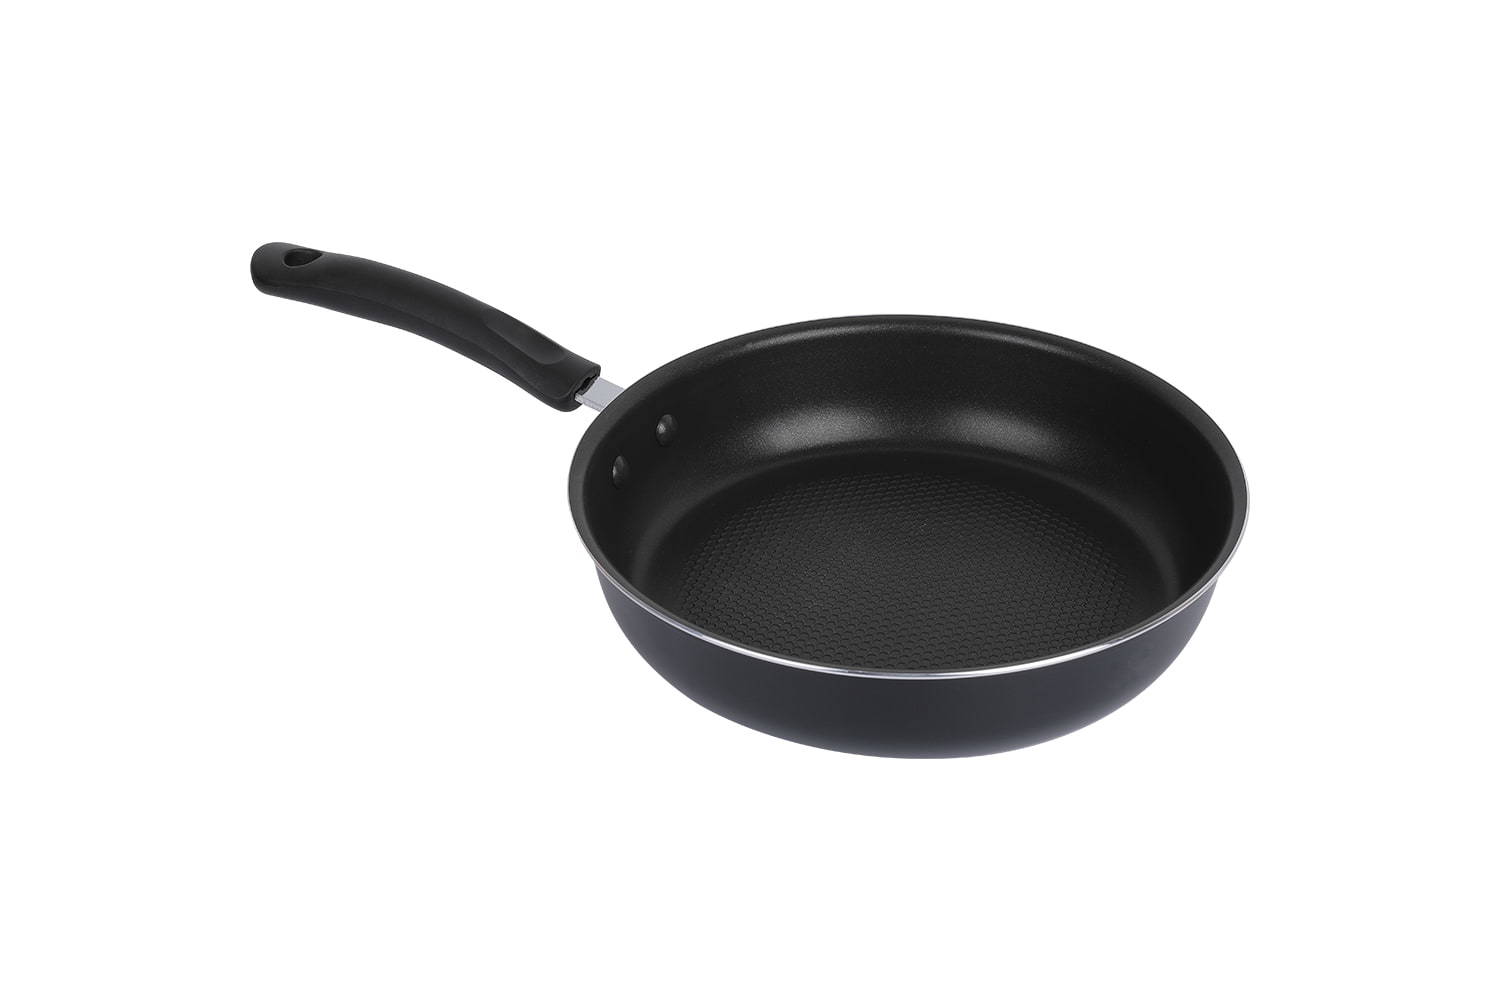 CF26J-CJ361 Frying Pan-Without glass lid 26 frying pan, Non stick, stove universal